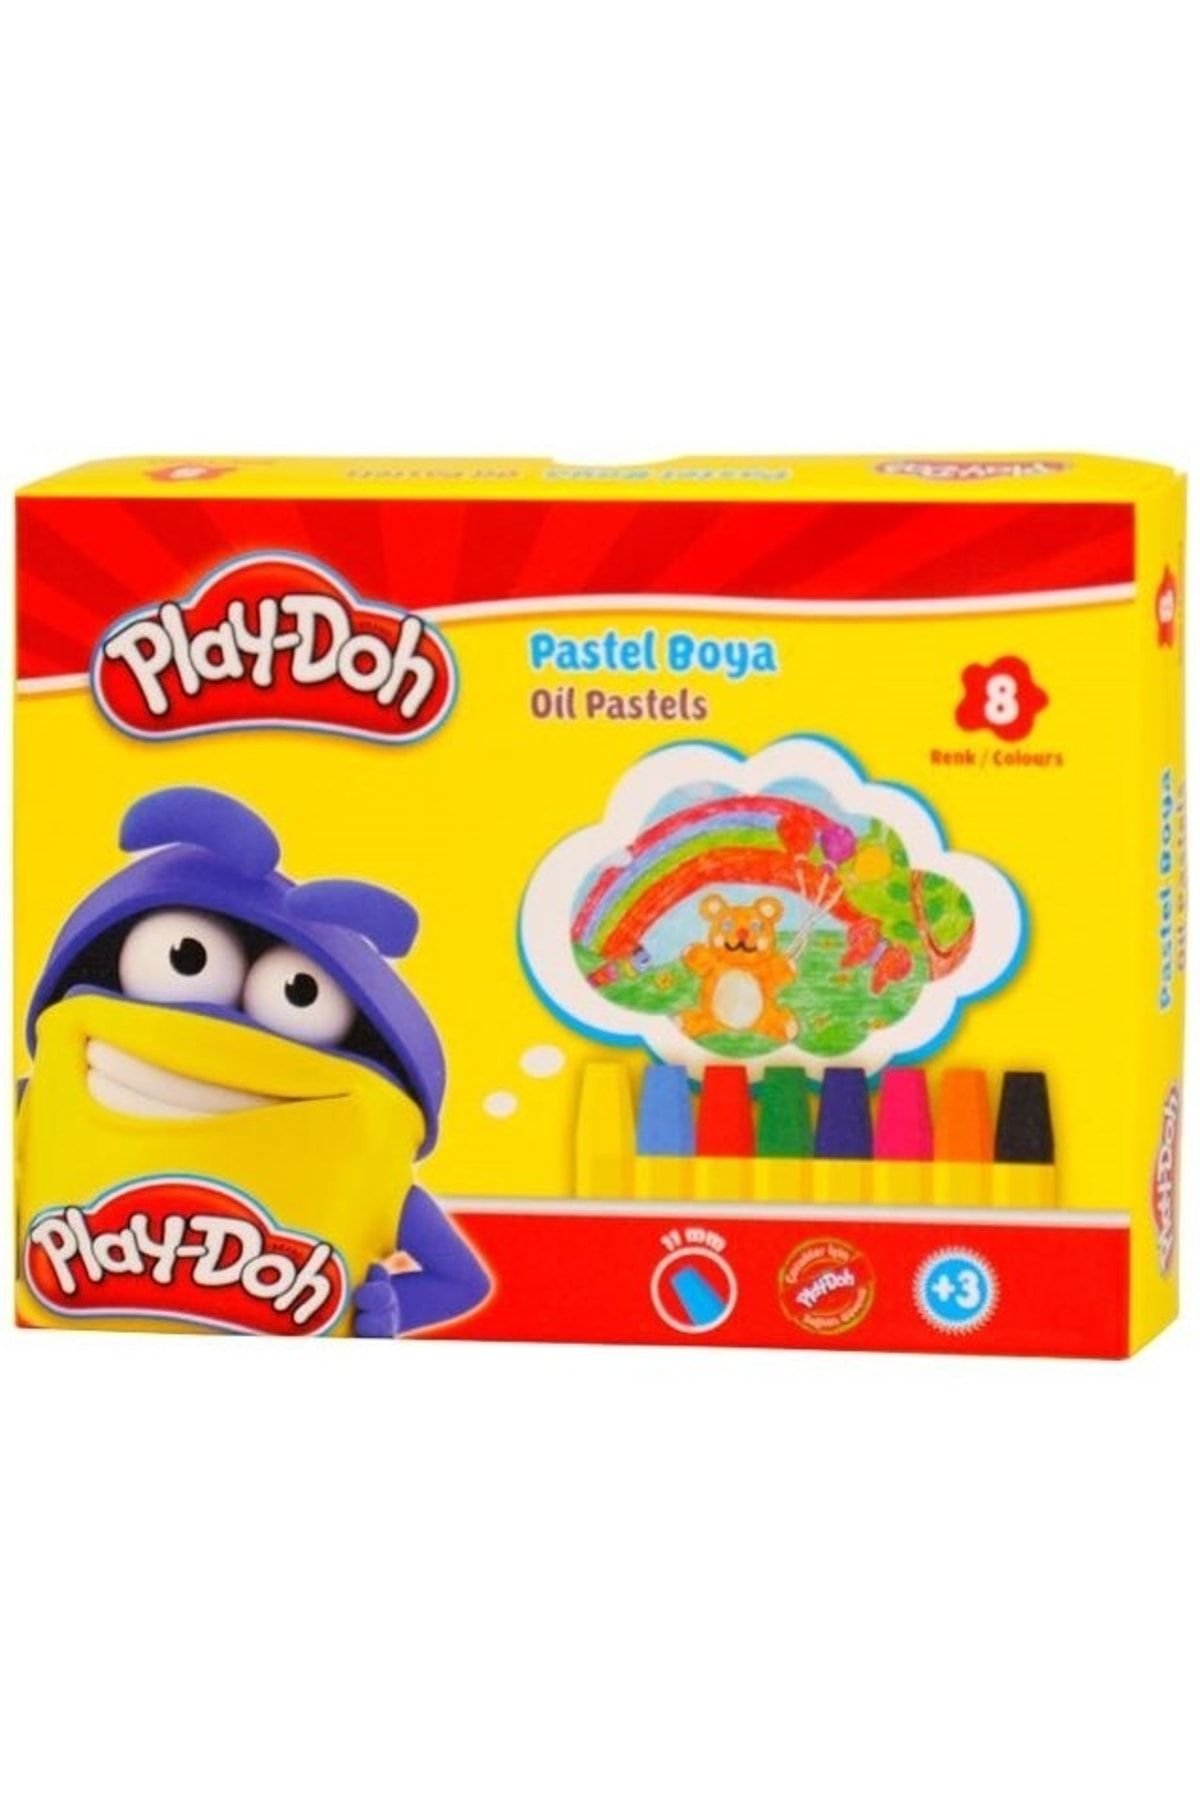 Play Doh Play-doh Pastel Boya 8 Renk Pa001